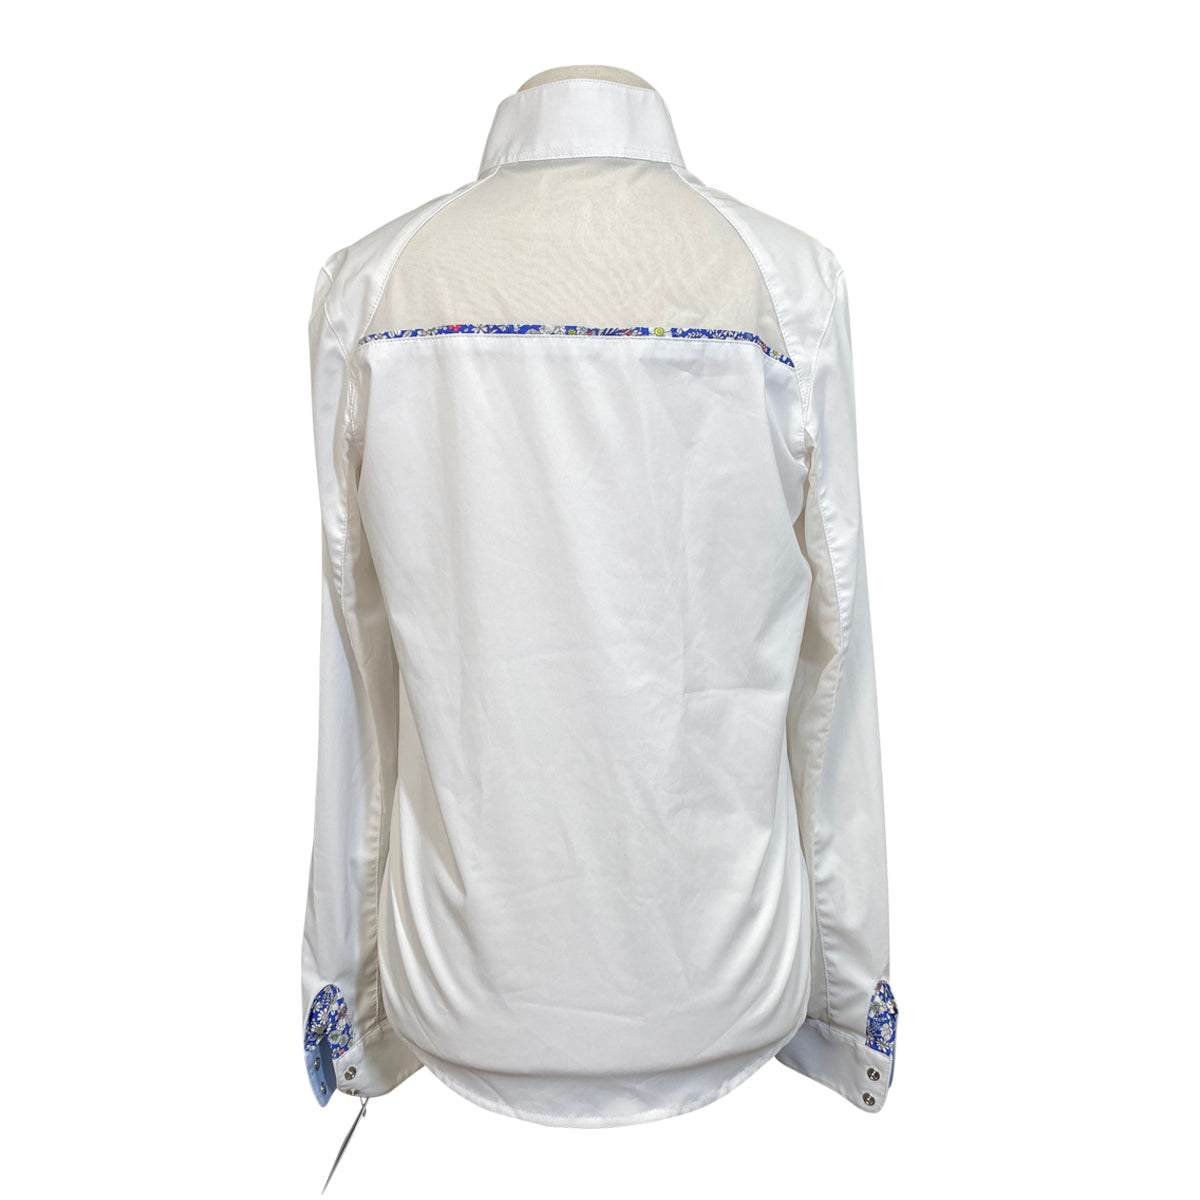 RJ Classics 'Cool Stretch Prestige' Show Shirt in White/Blue Flowers